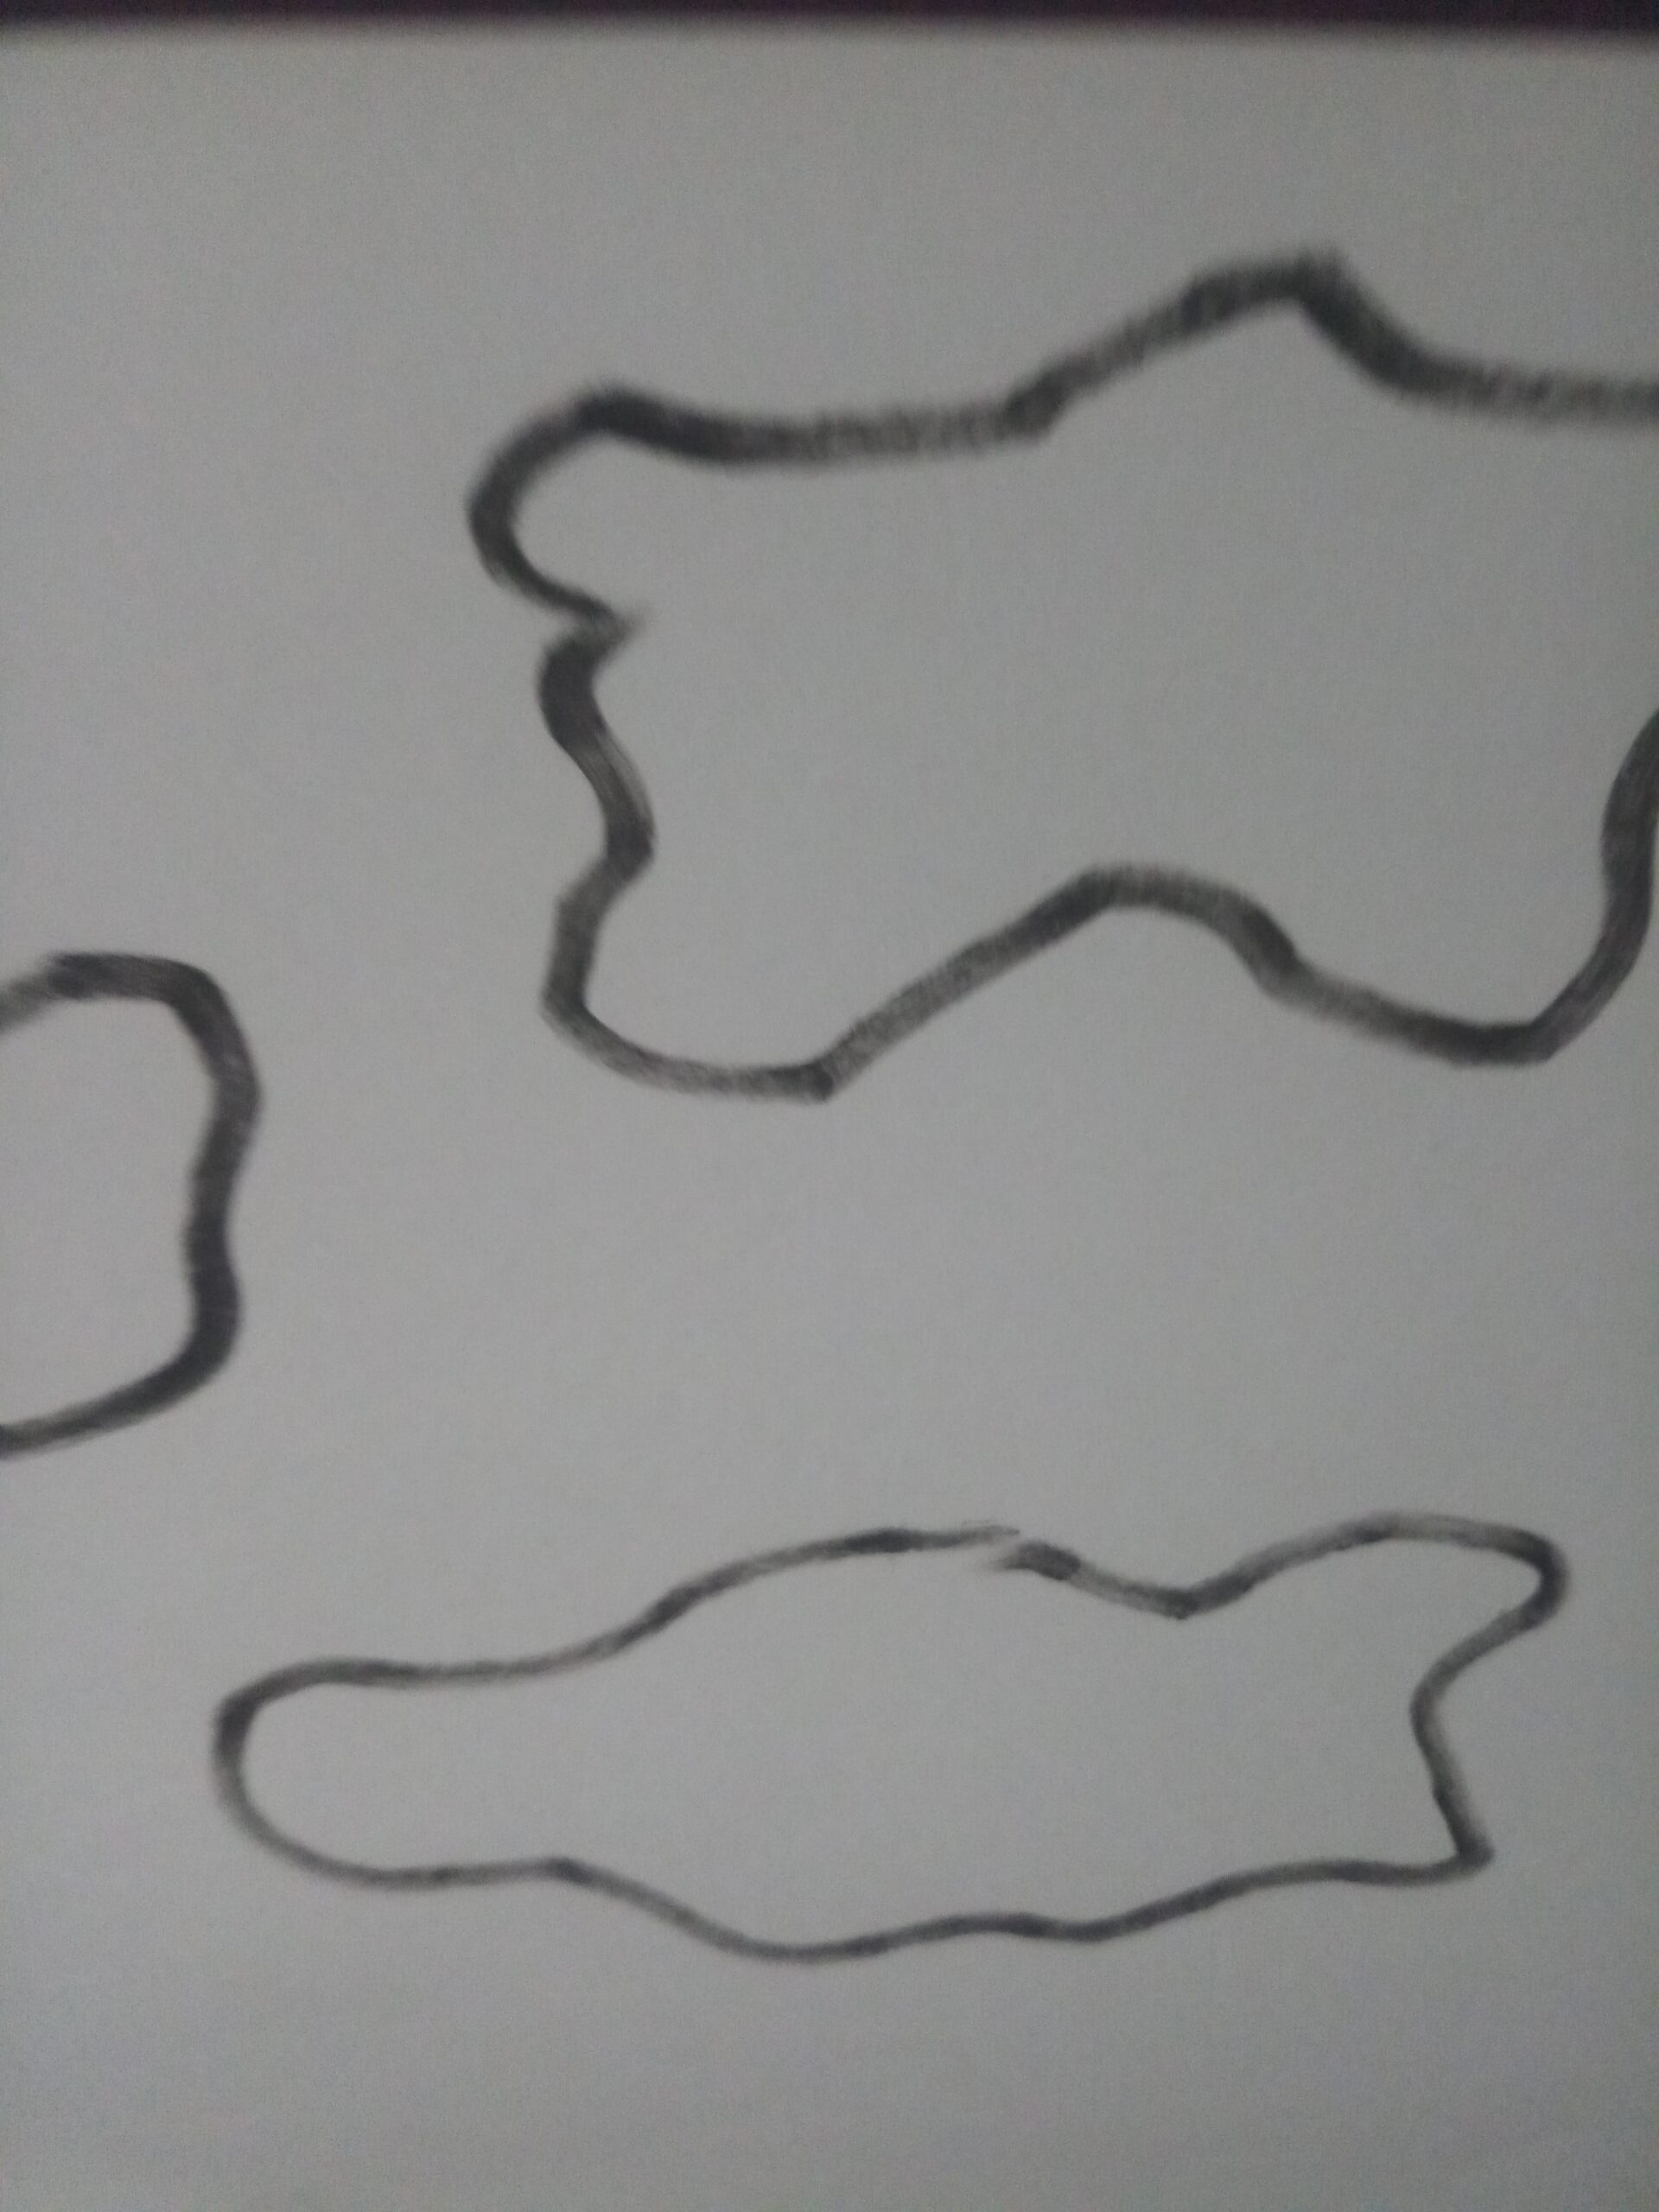 Drawing of cloud or amoeba